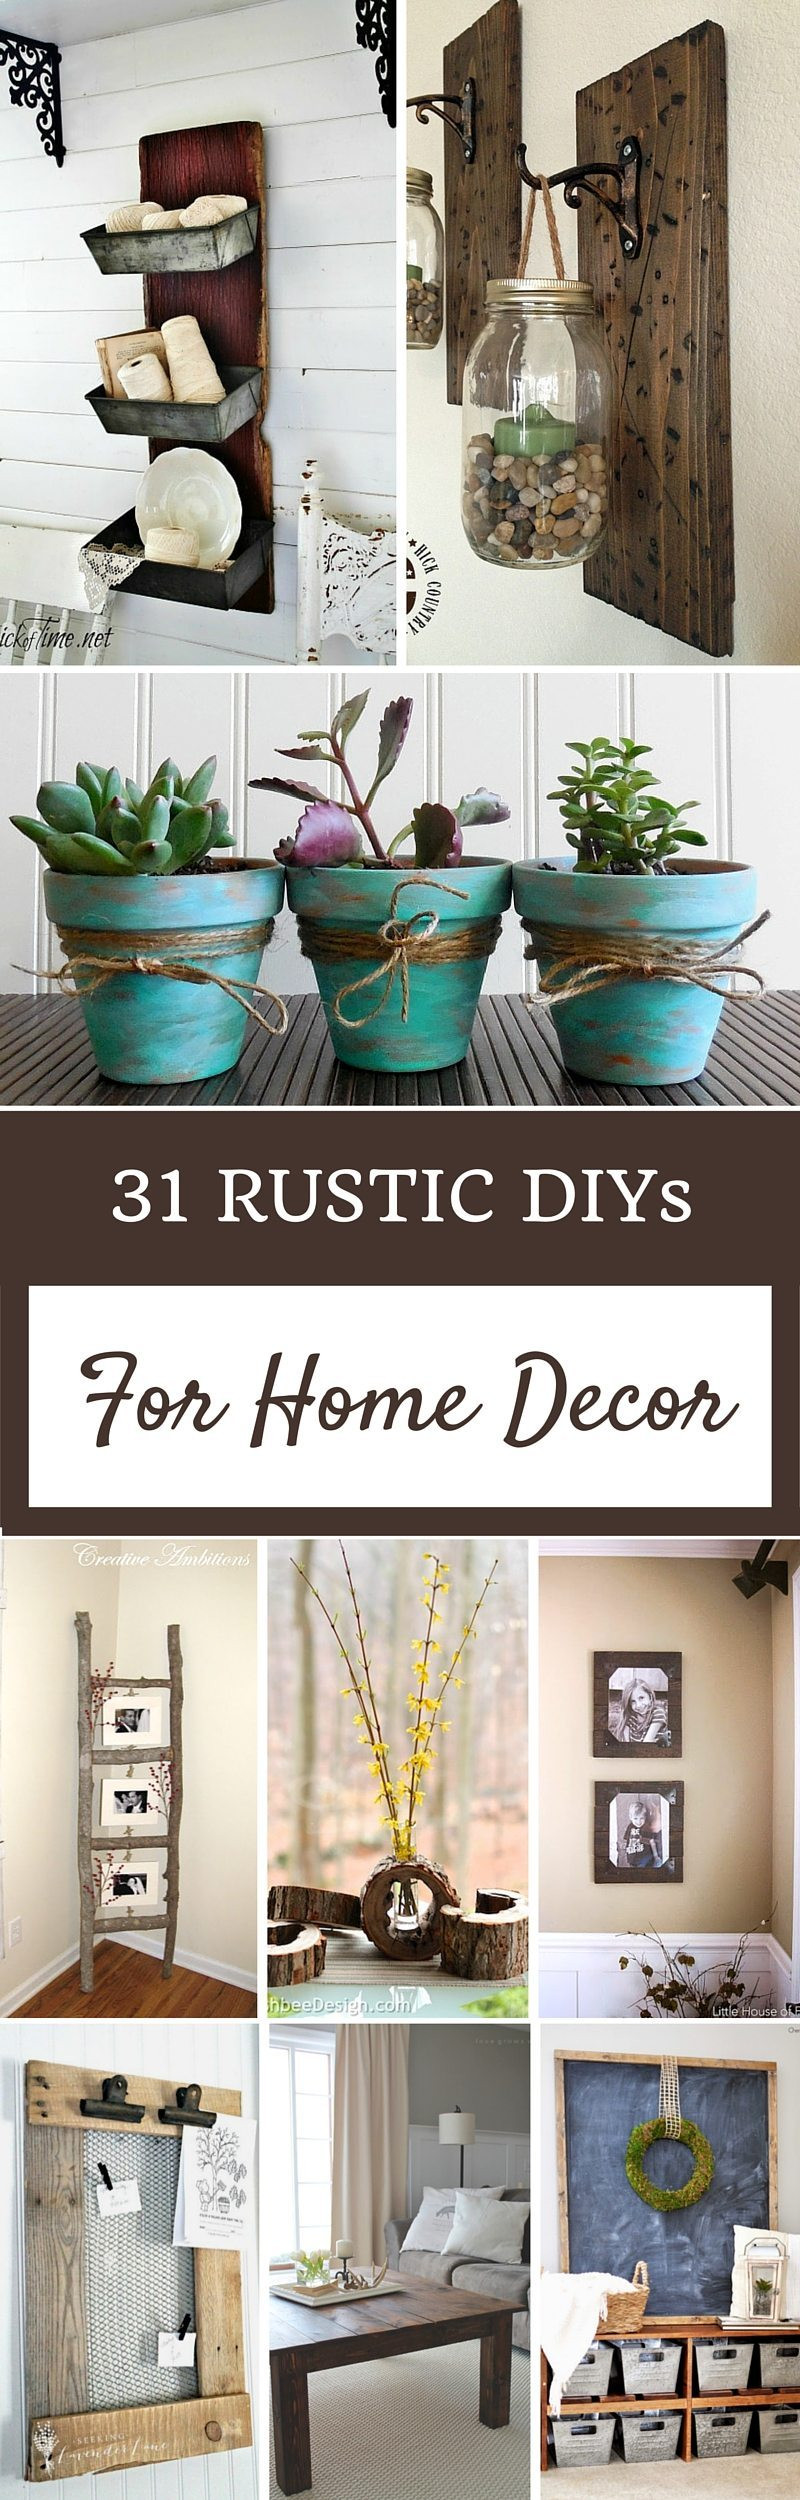 Pinterest Home Decor DIY
 Rustic Home Decor Ideas